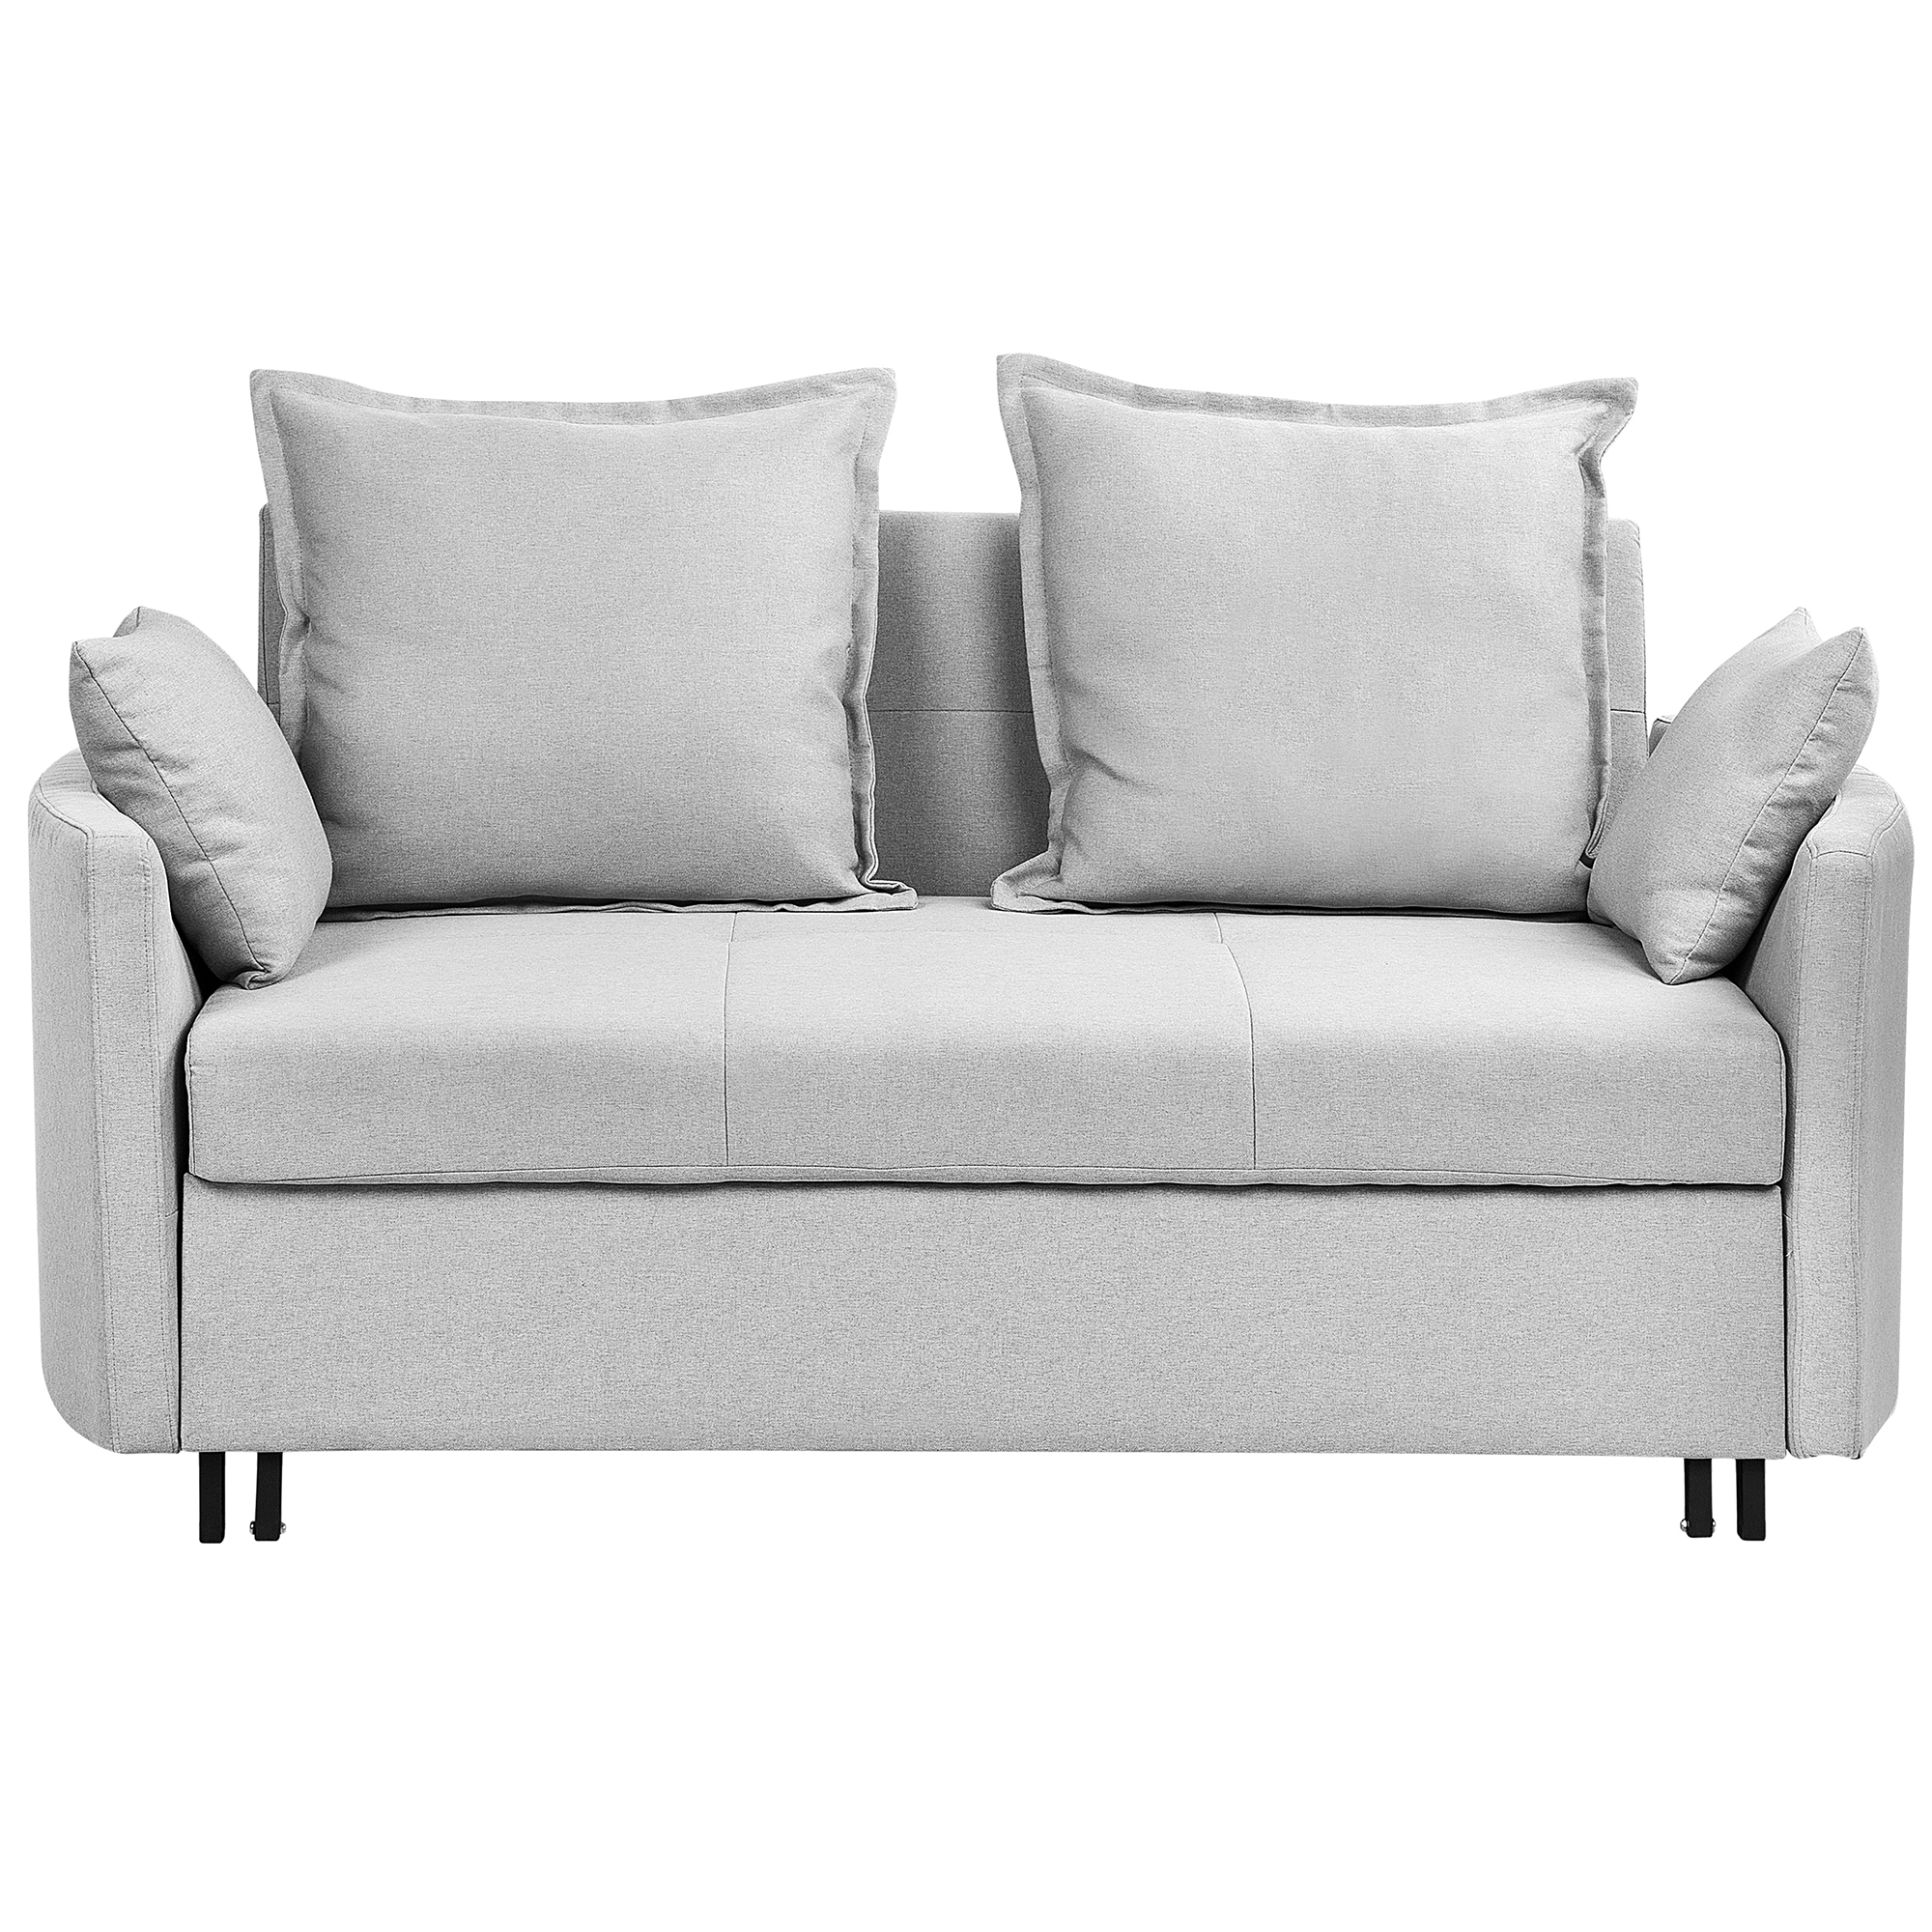 Beliani 2 Seater Sofa Bed Light Grey Sleeping Function Profiled Armrests